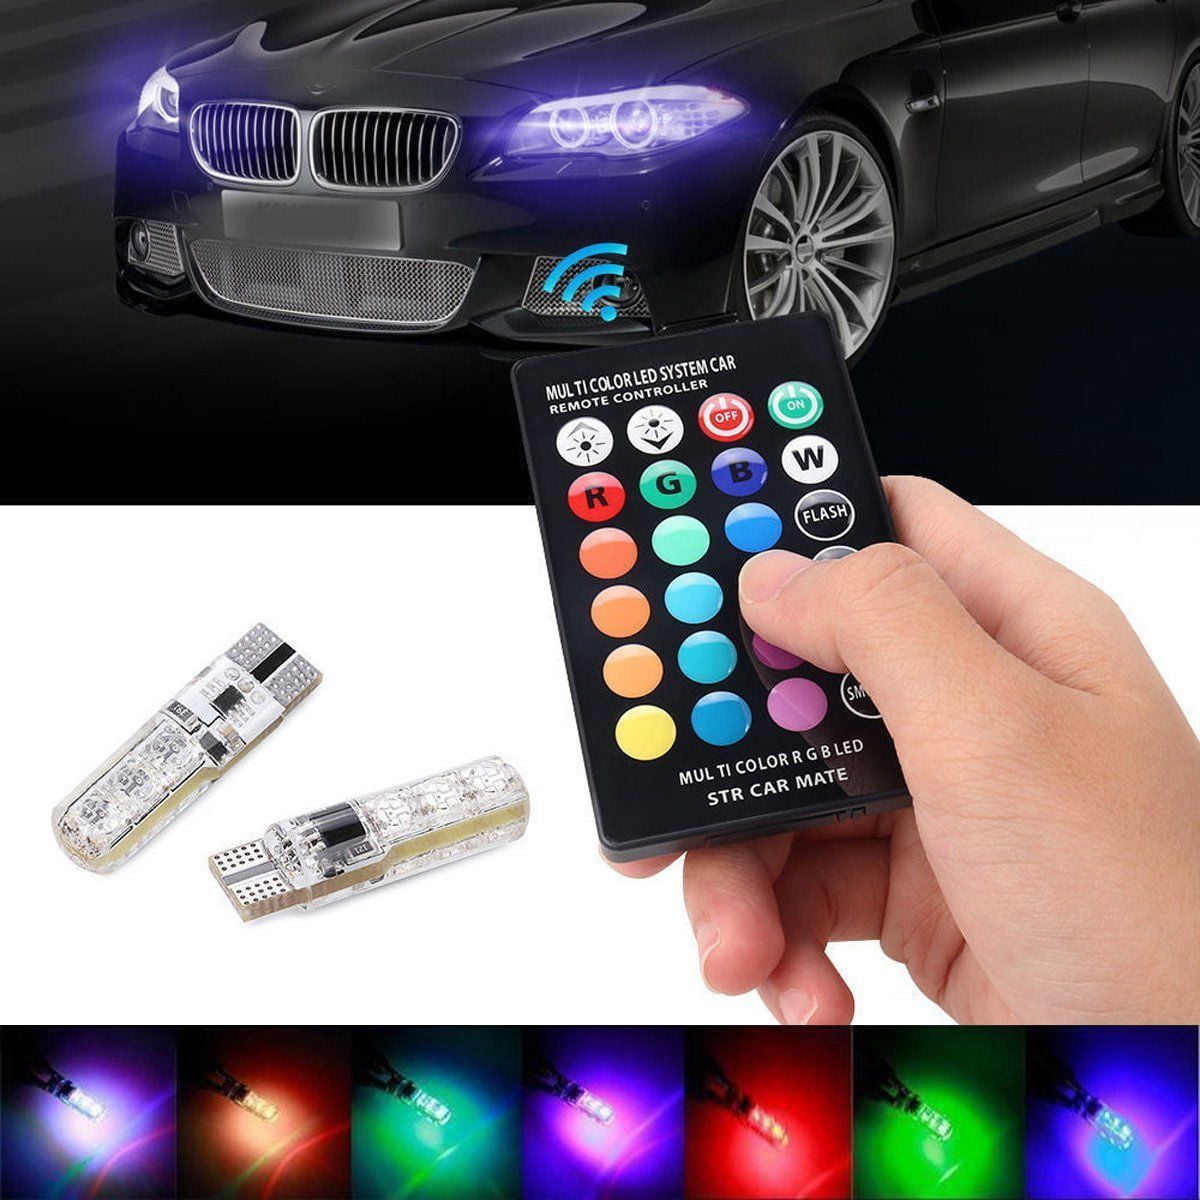 2 X T10 W5W 6 SMD 5050 RGB LED Car Wedge Side Light Reading Bulbs Remote Control